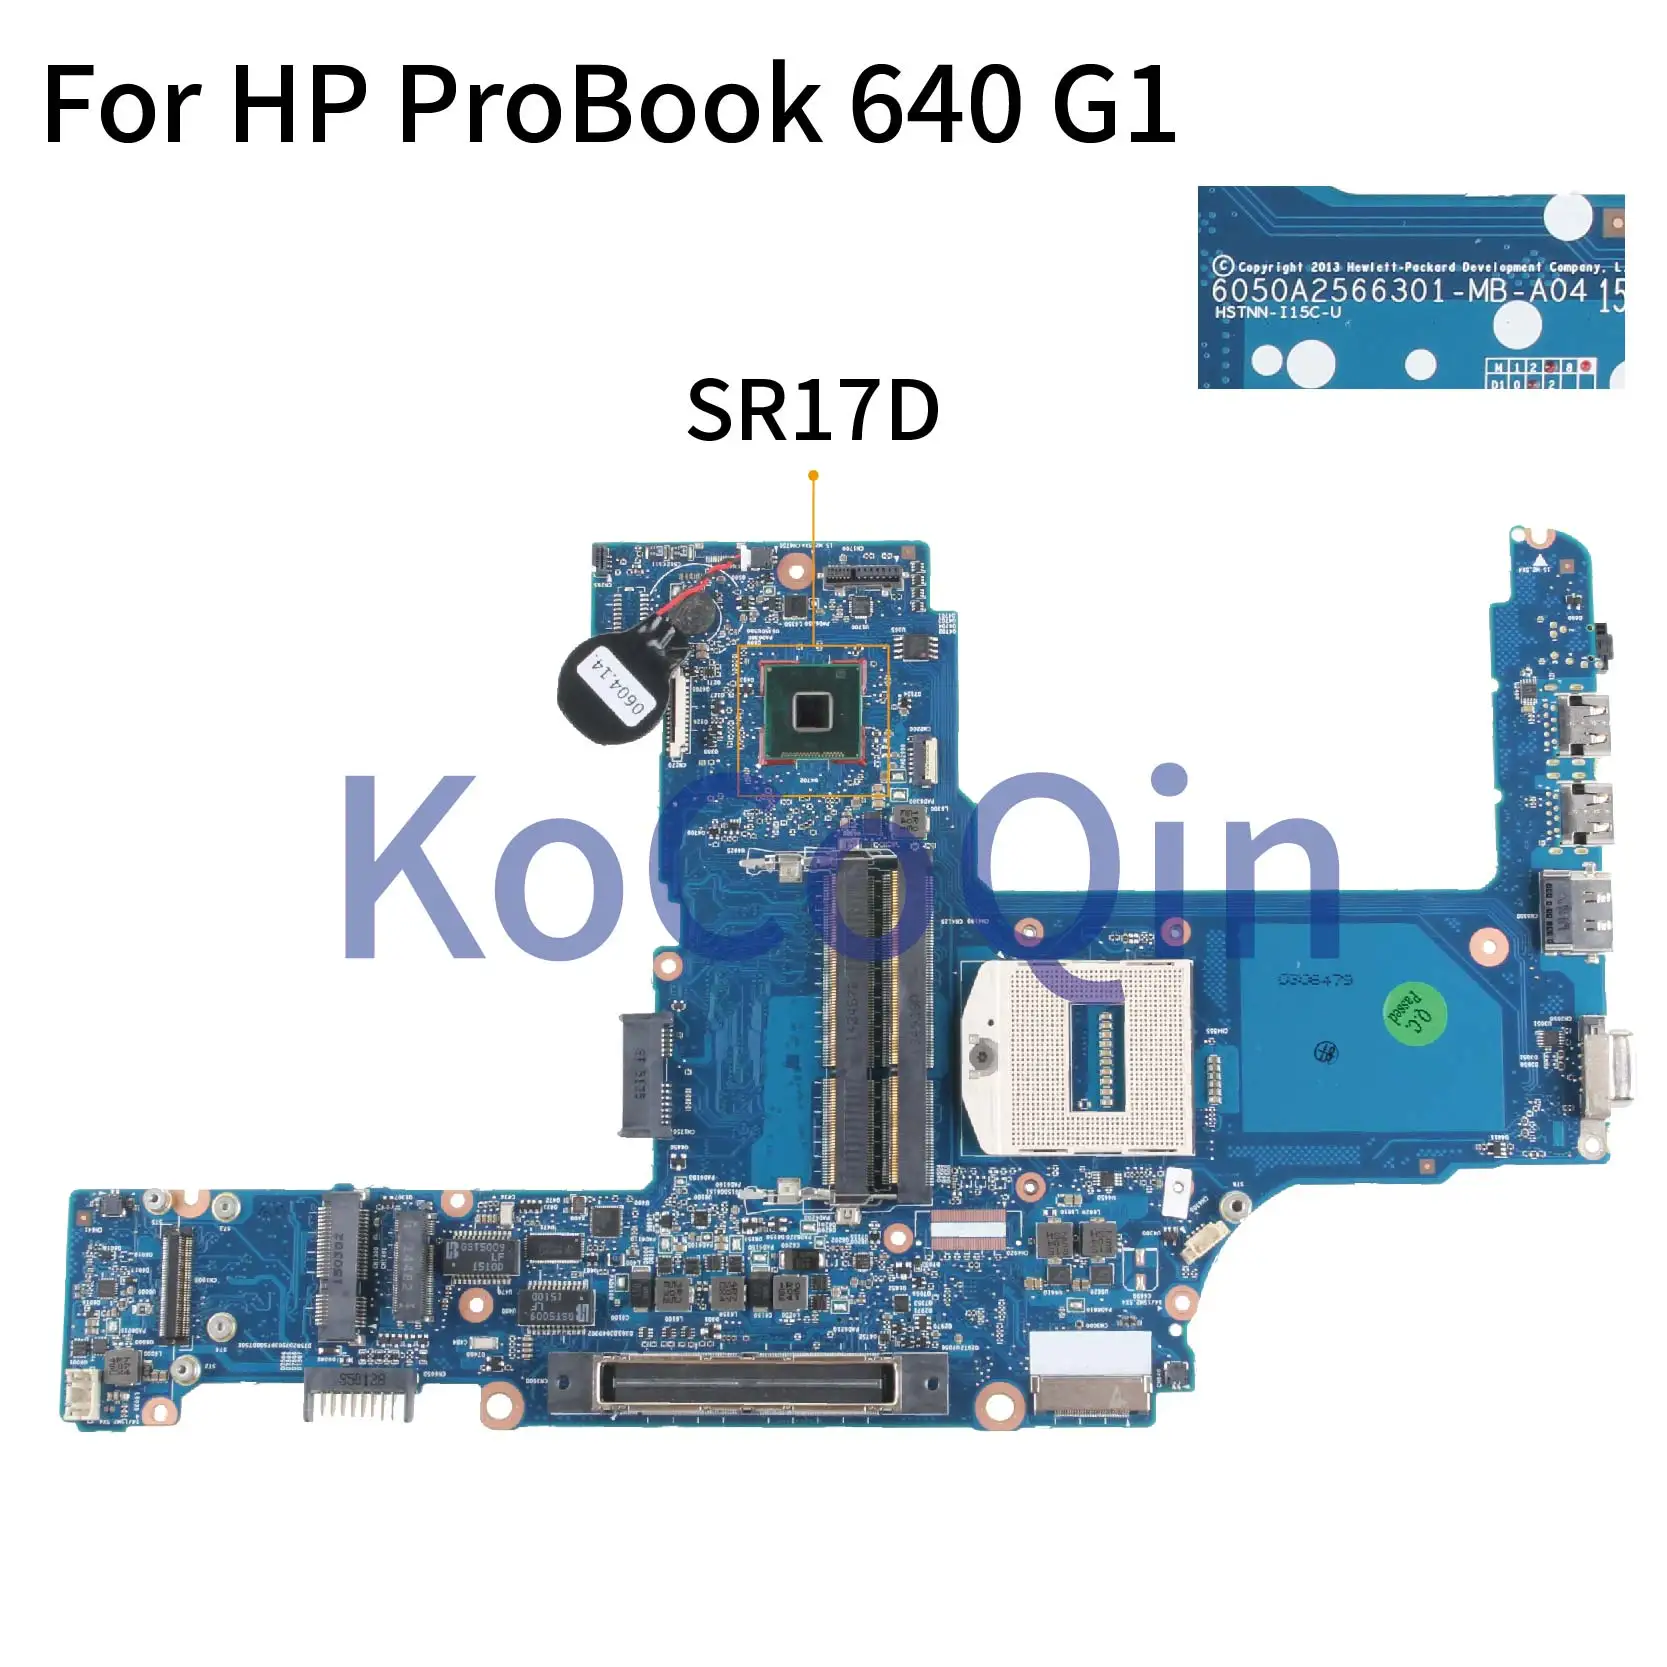 Kocoqin материнская плата для ноутбука hp ProBook 640 G1 650 G1 HM87 материнская плата 6050A2566301-MB-A04 SR17D